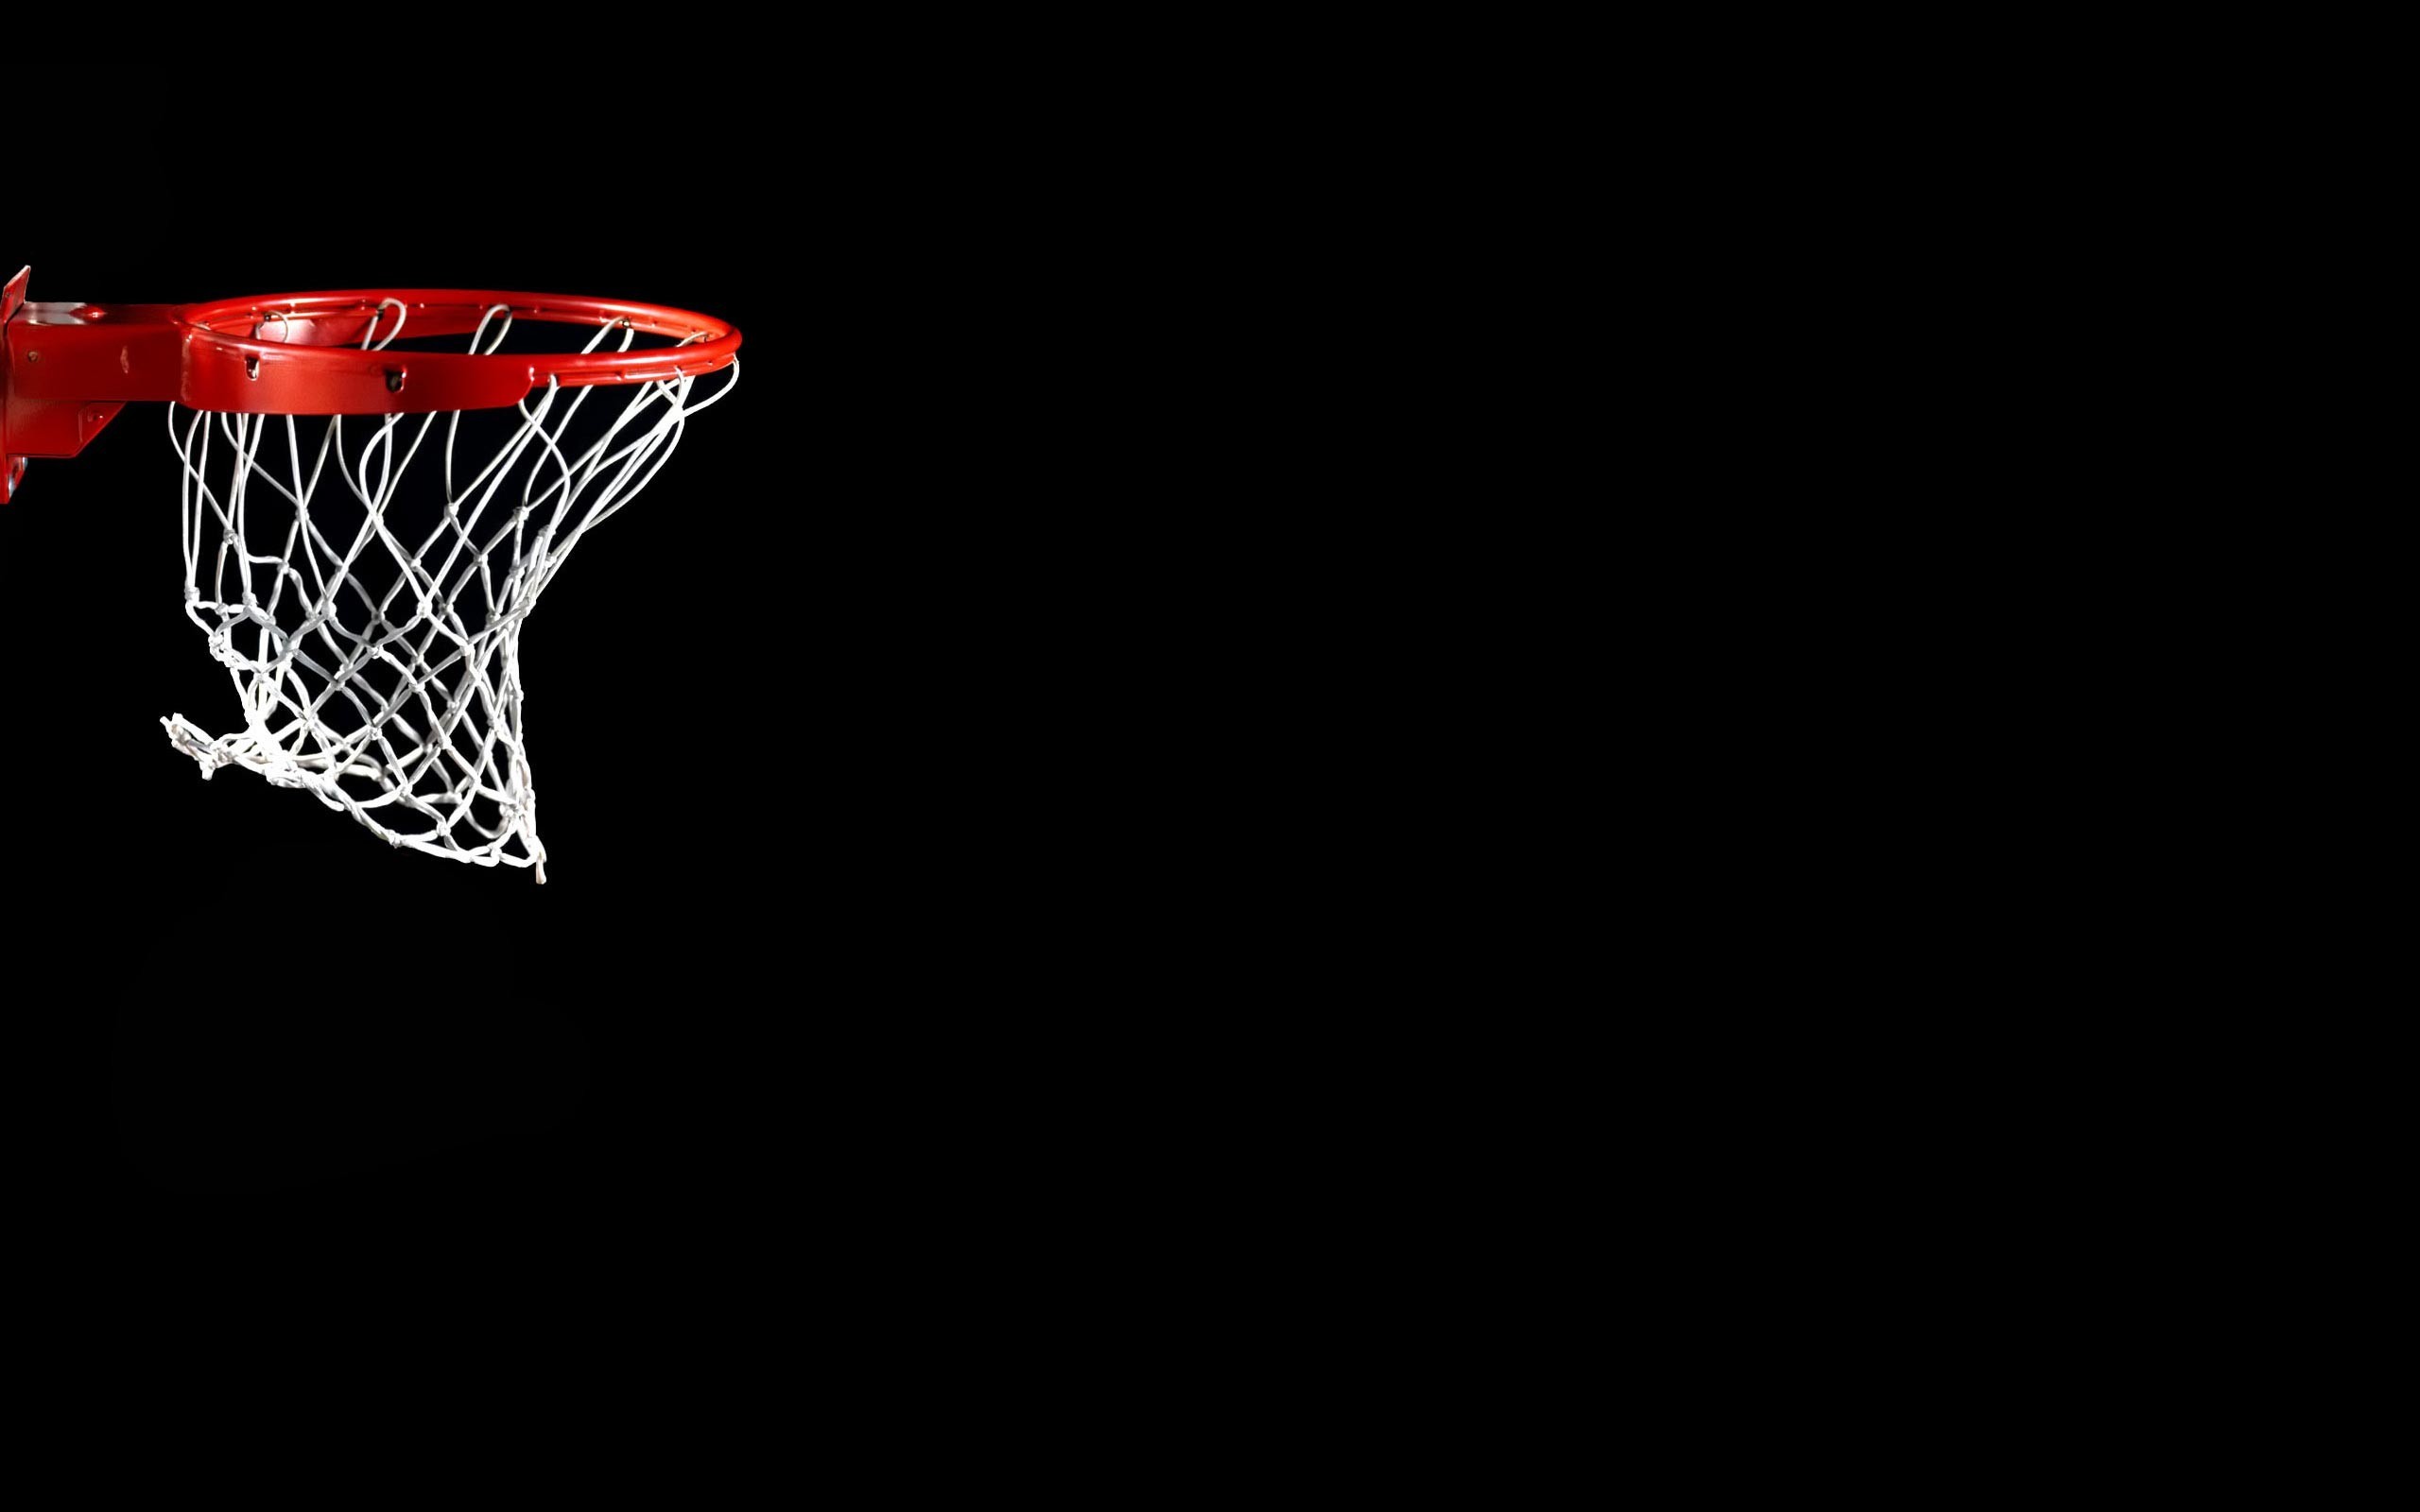 2560x1600 Free Basketball Wallpaper Download - http://www.youthsportfoto.com/free